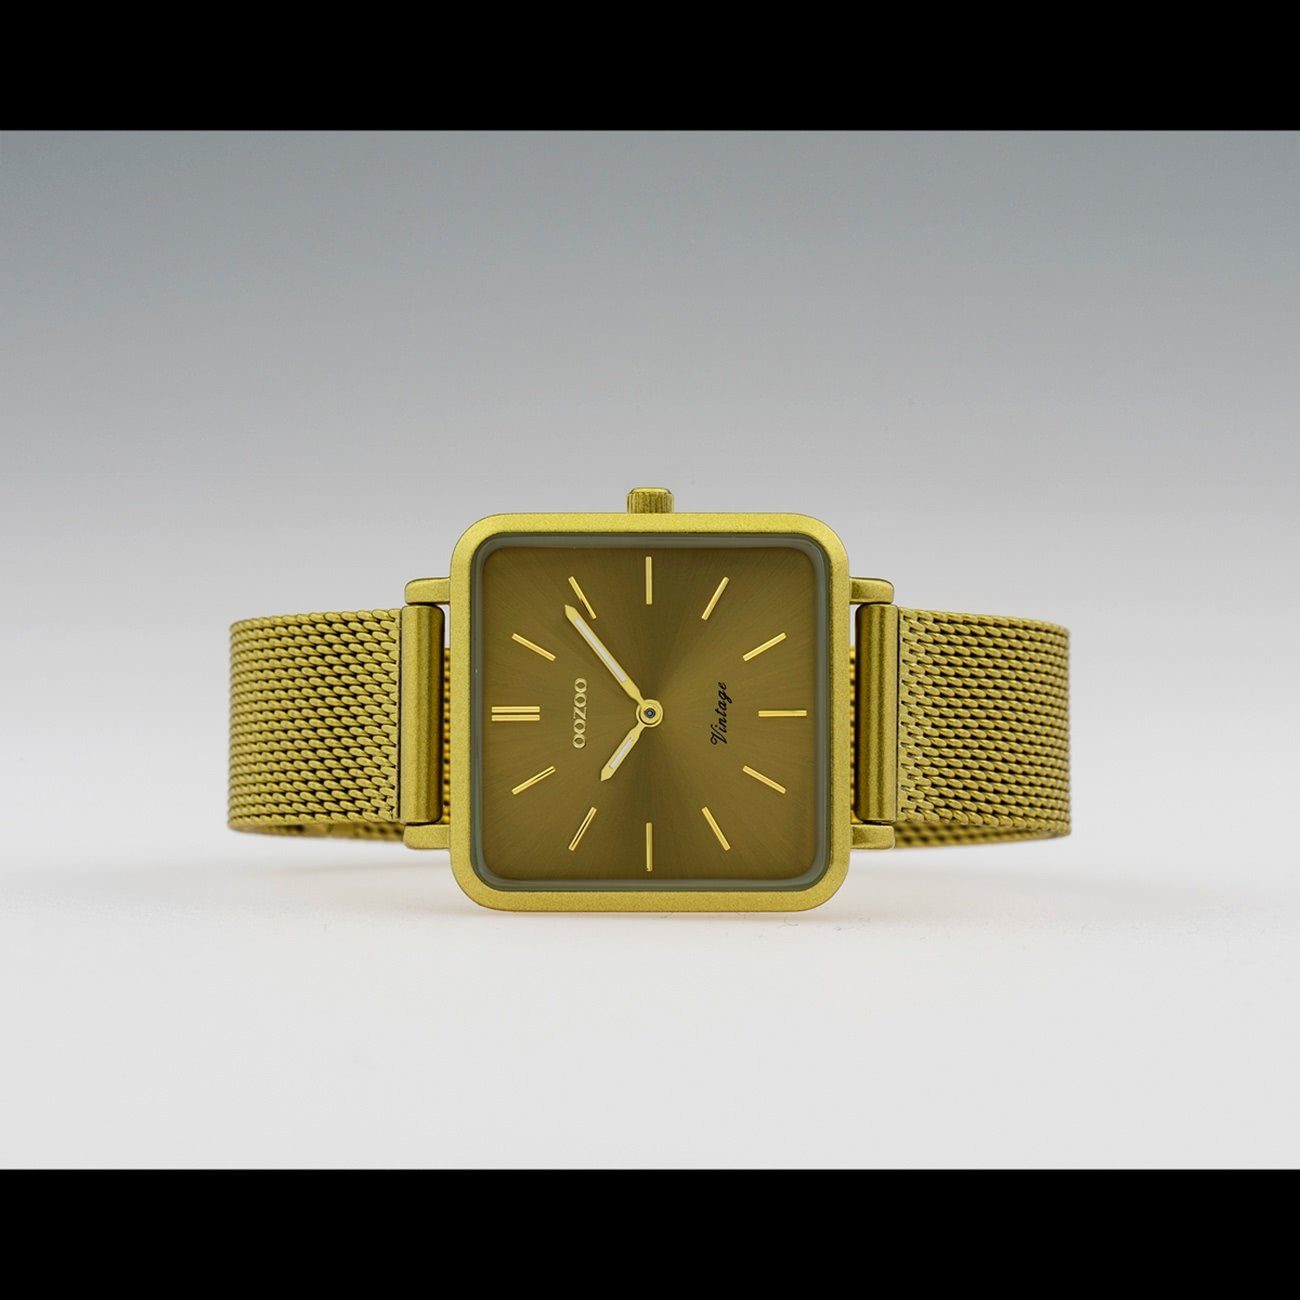 Armbanduhr gold klein OOZOO (ca. Fashion-Style Edelstahlarmband, Analog, eckig, Damen Oozoo Quarzuhr Damenuhr 29mm)